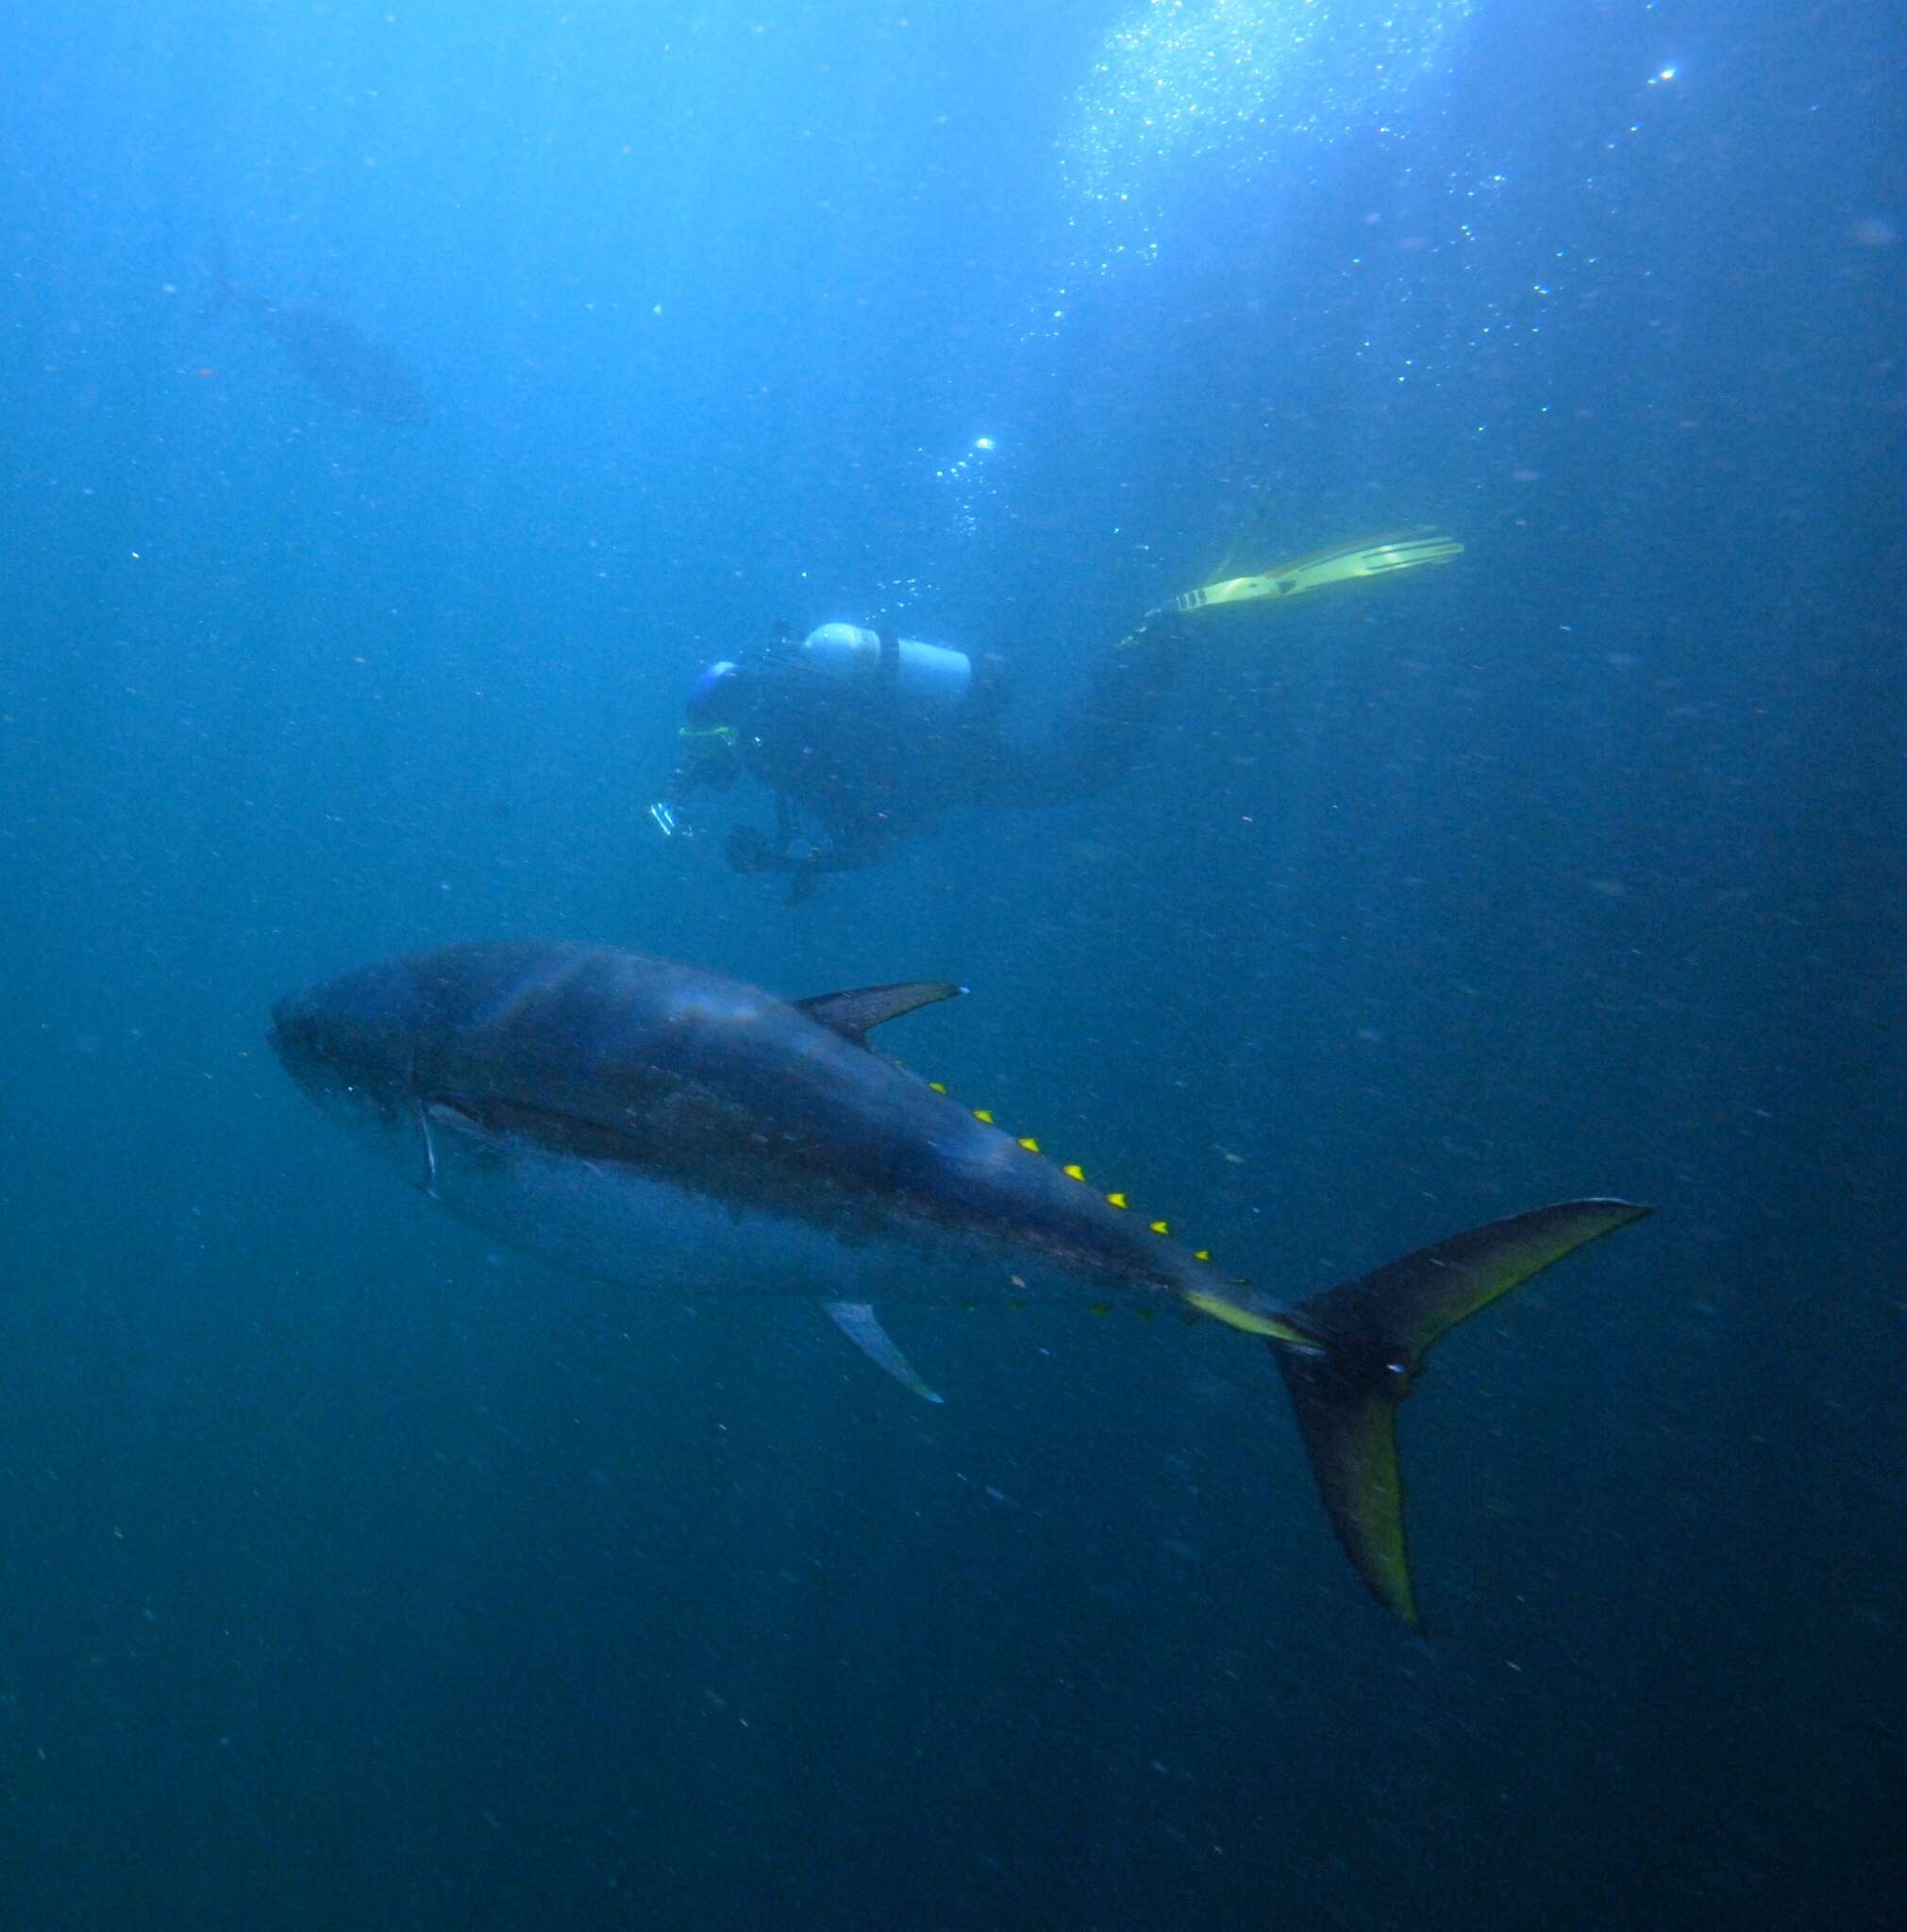 Image of Southern Bluefin Tuna